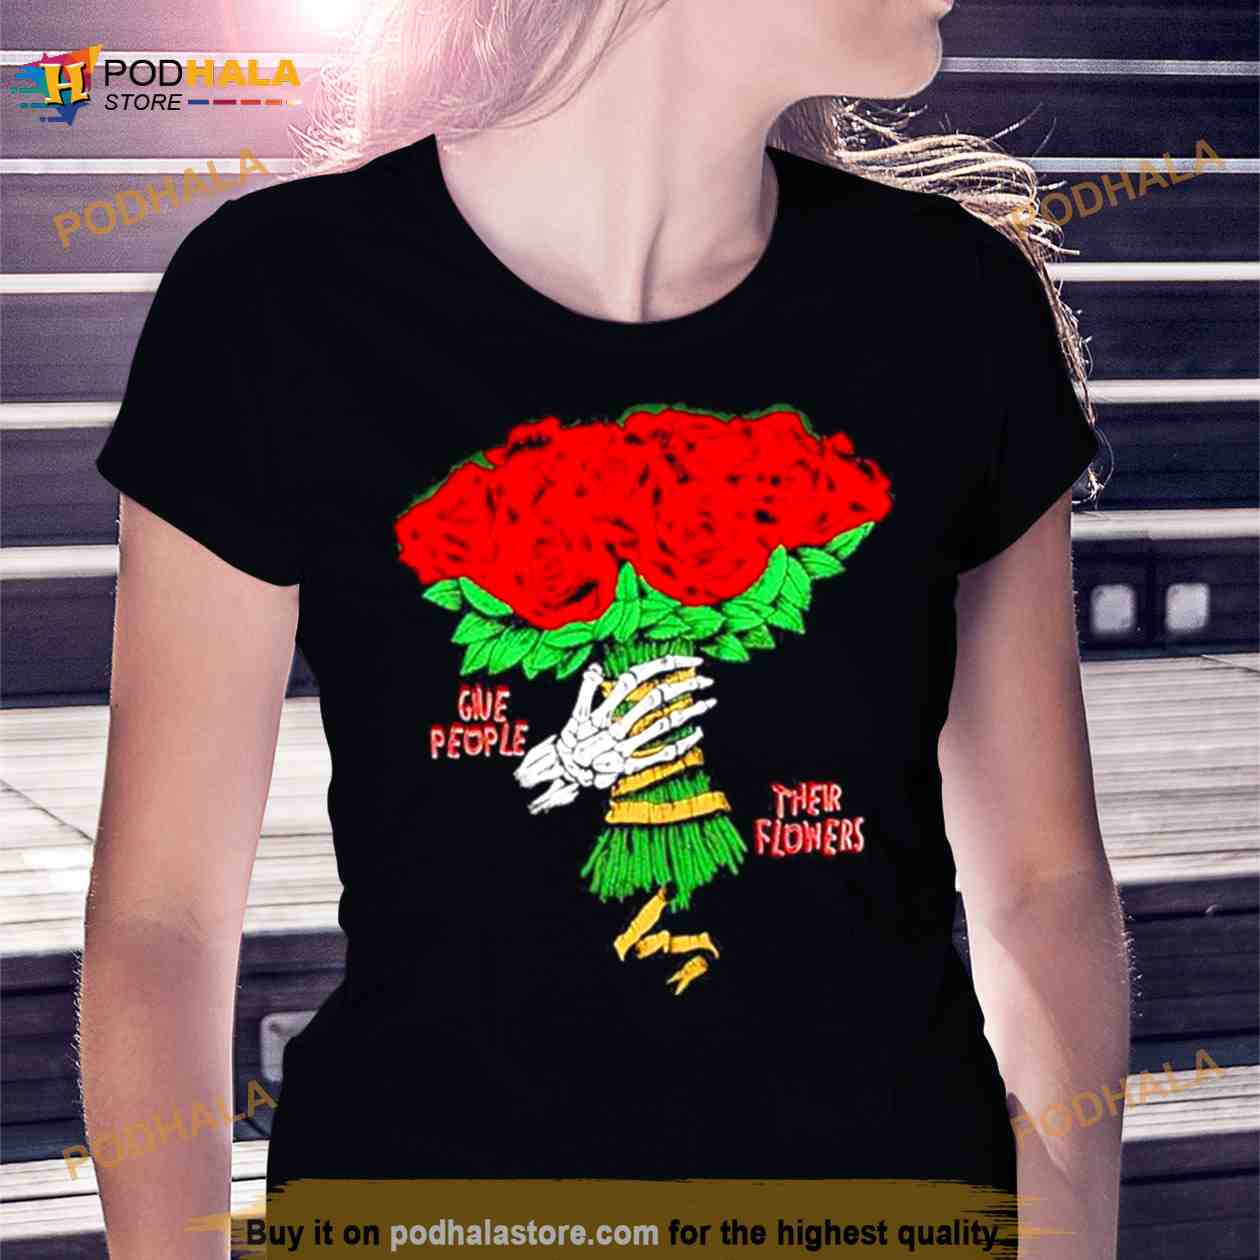 skull and flowers t-shirt design - Buy t-shirt designs